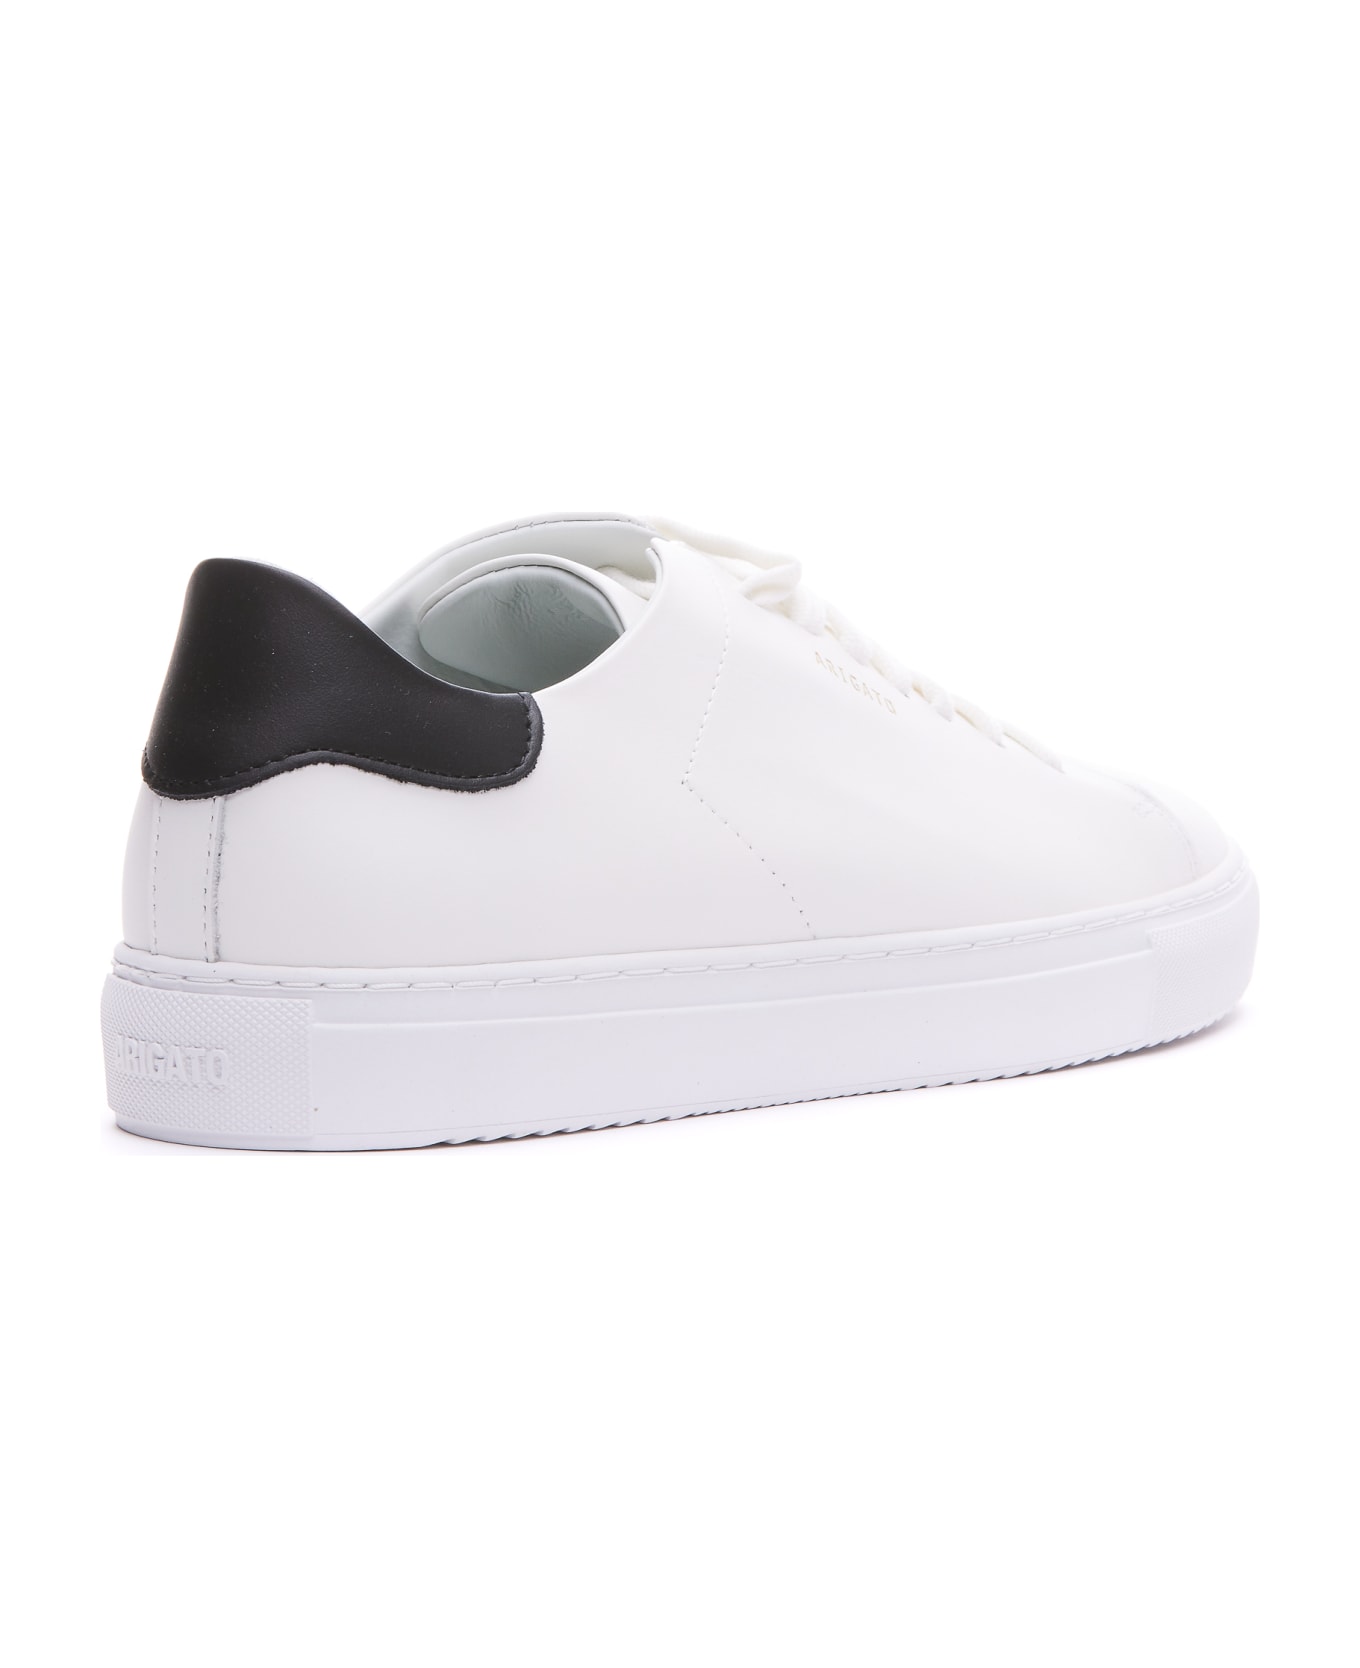 Axel Arigato Clean 90 Sneakers - White/black スニーカー